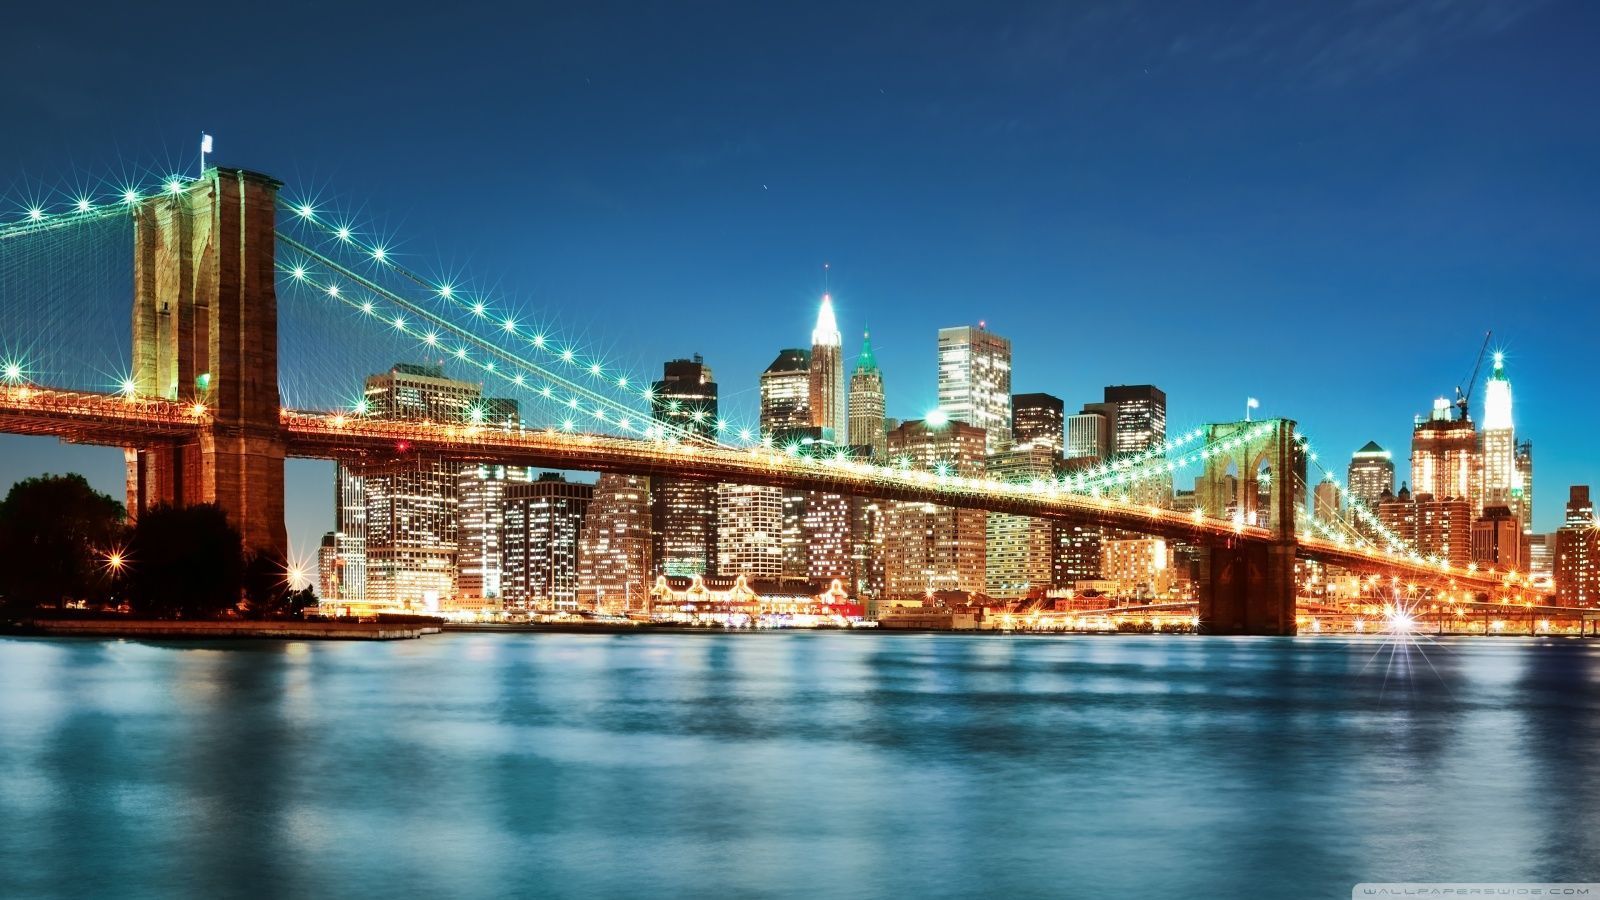 New York City night lights wallpaper 49572 - City impression